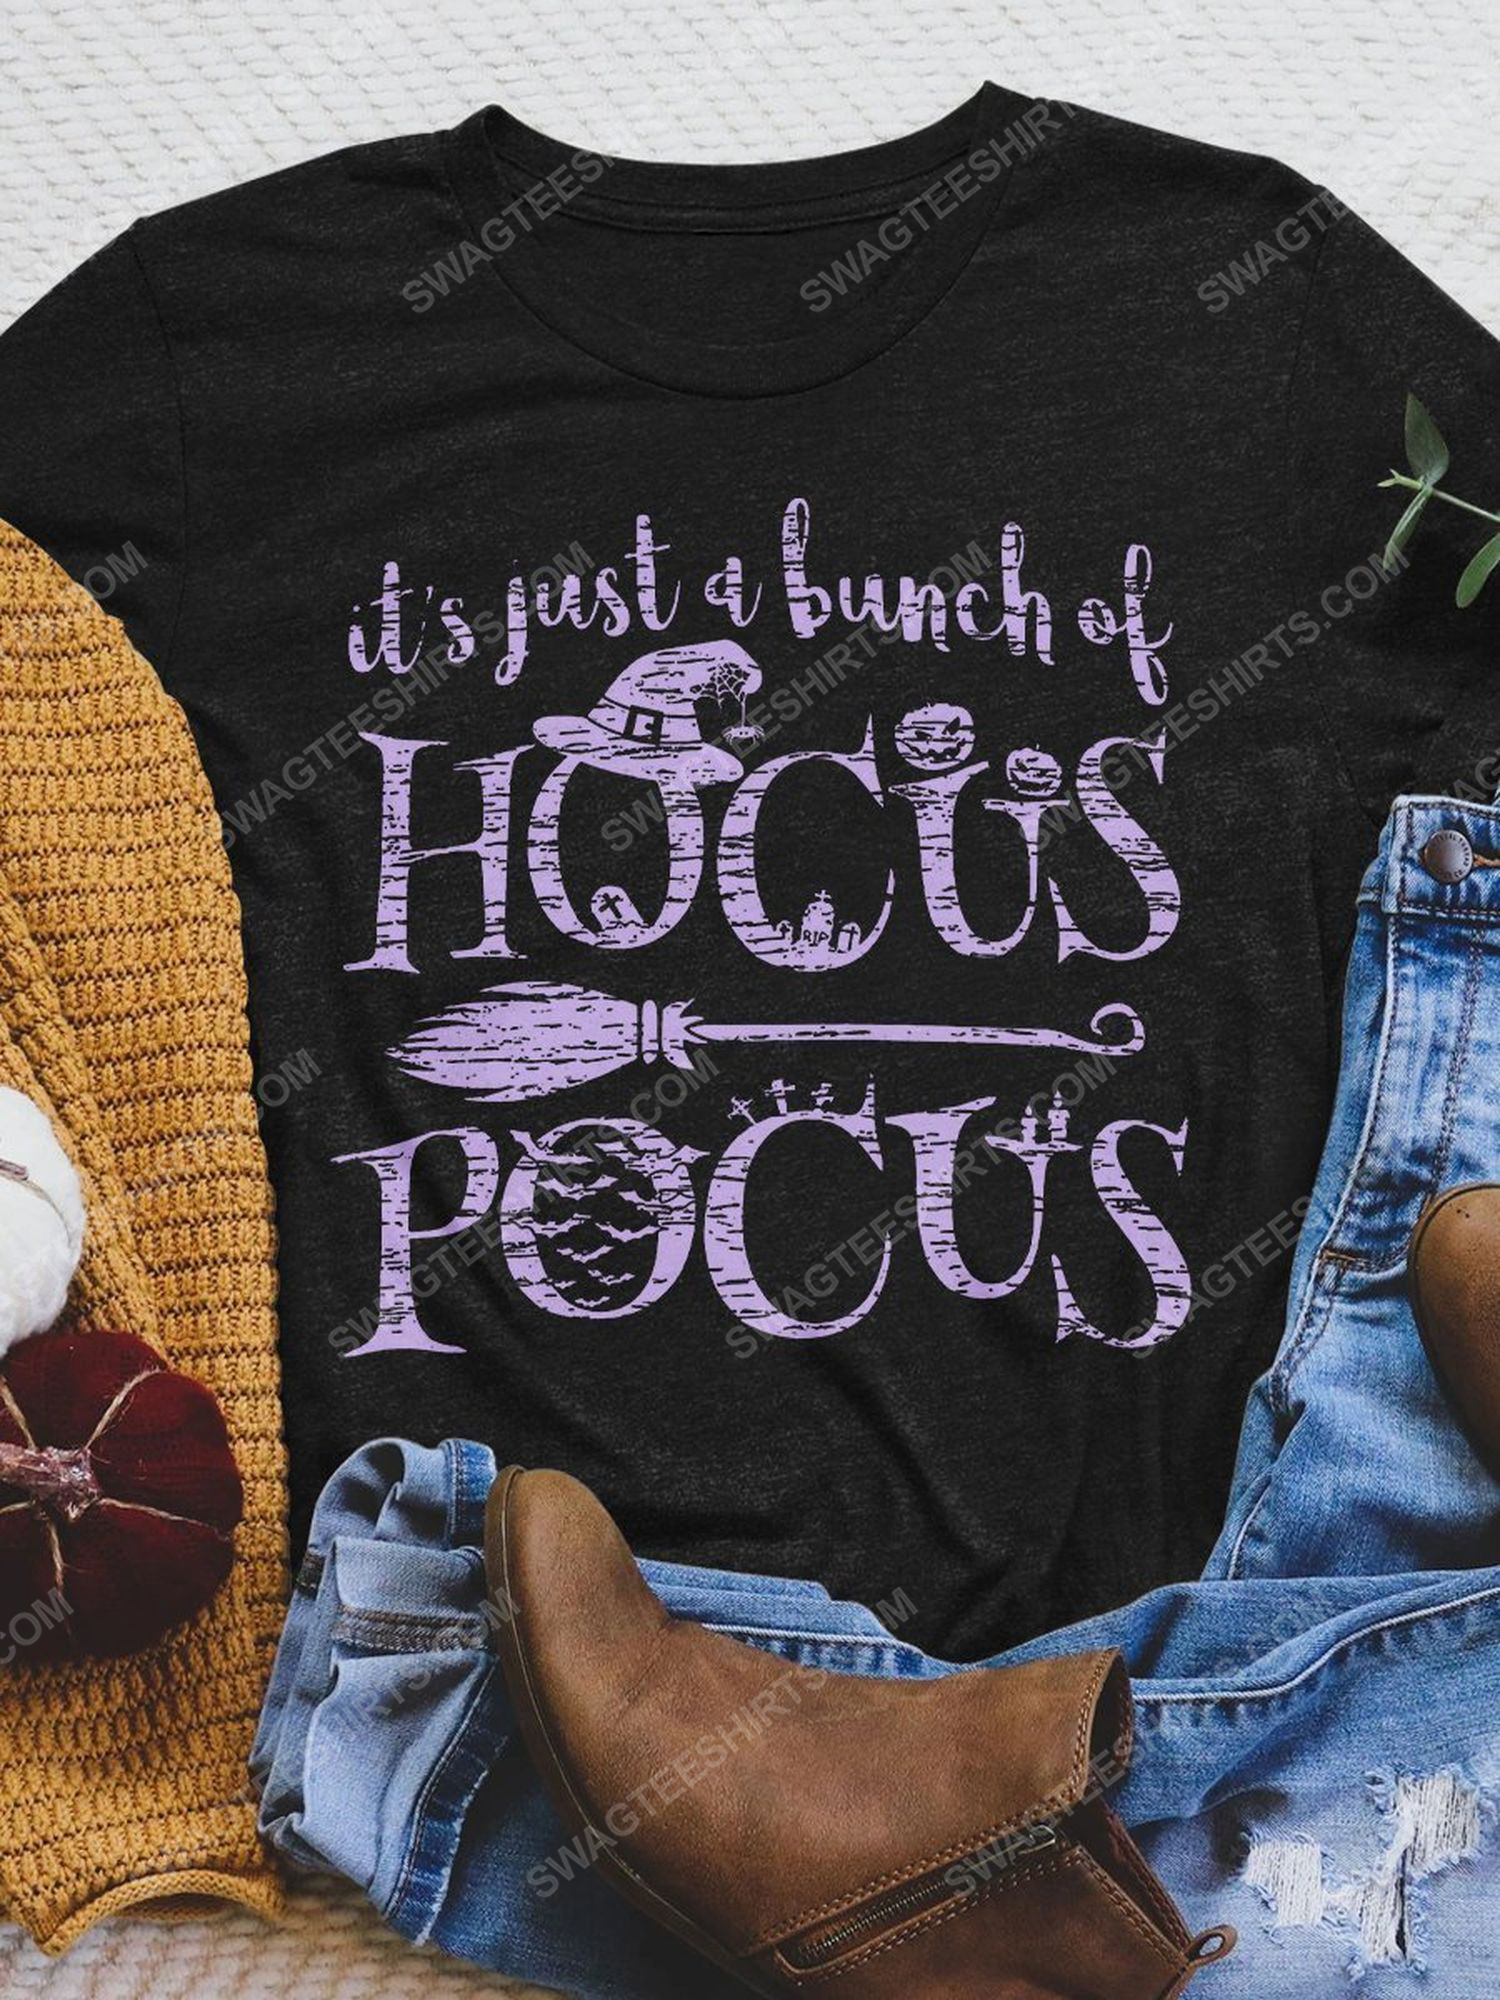 Halloween it's just a bunch of hocus pocus shirt 1 - Copy (2)